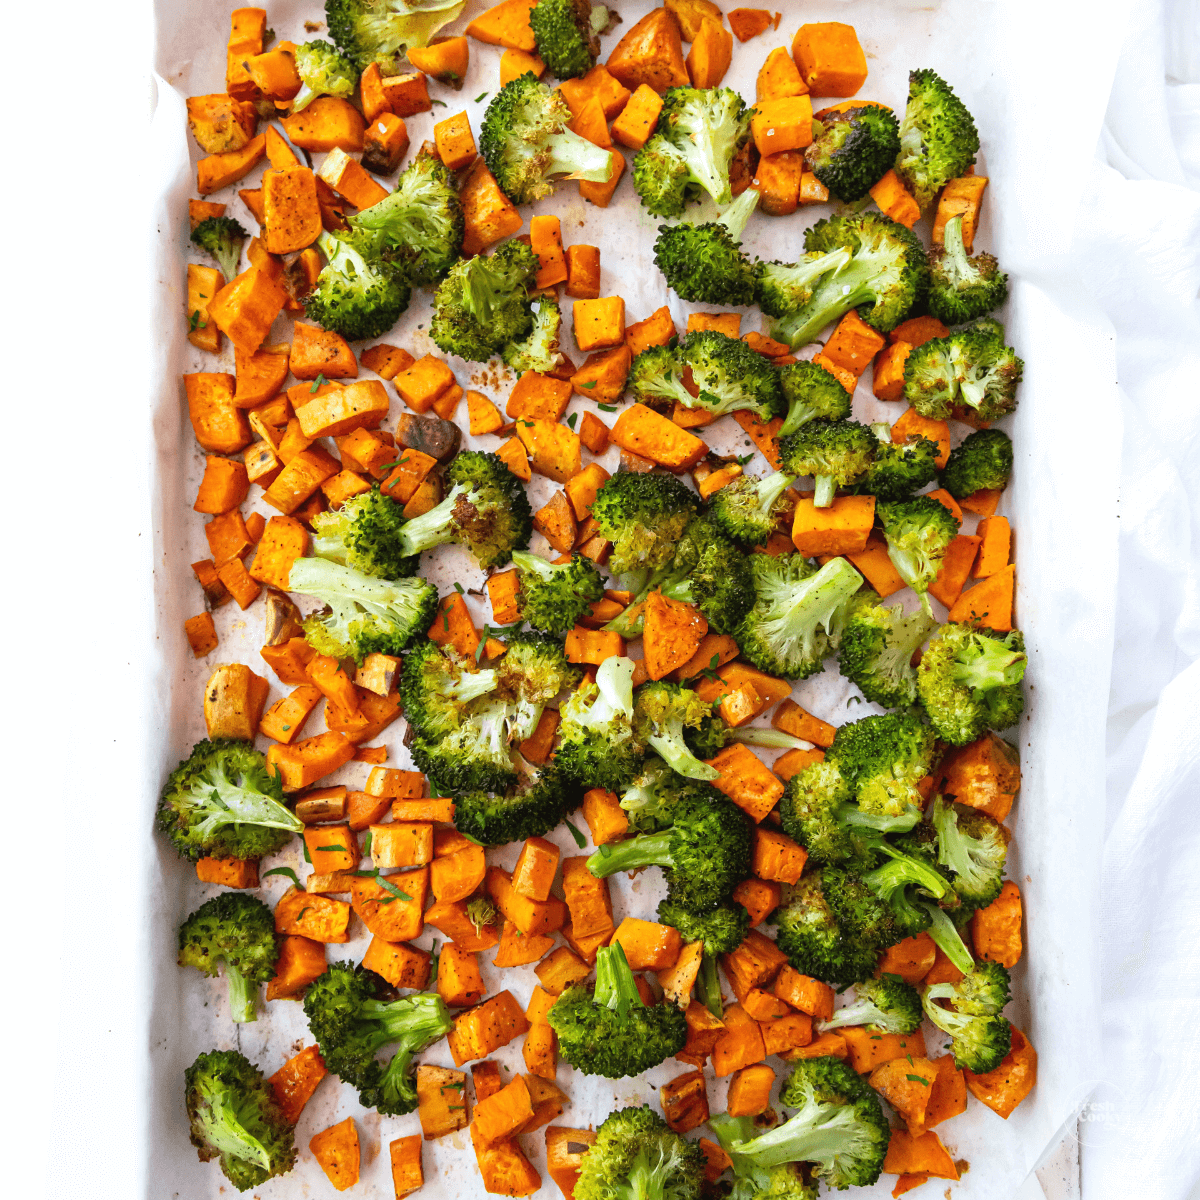 Roasted broccoli and sweet potatoes on baking sheet, roasted.